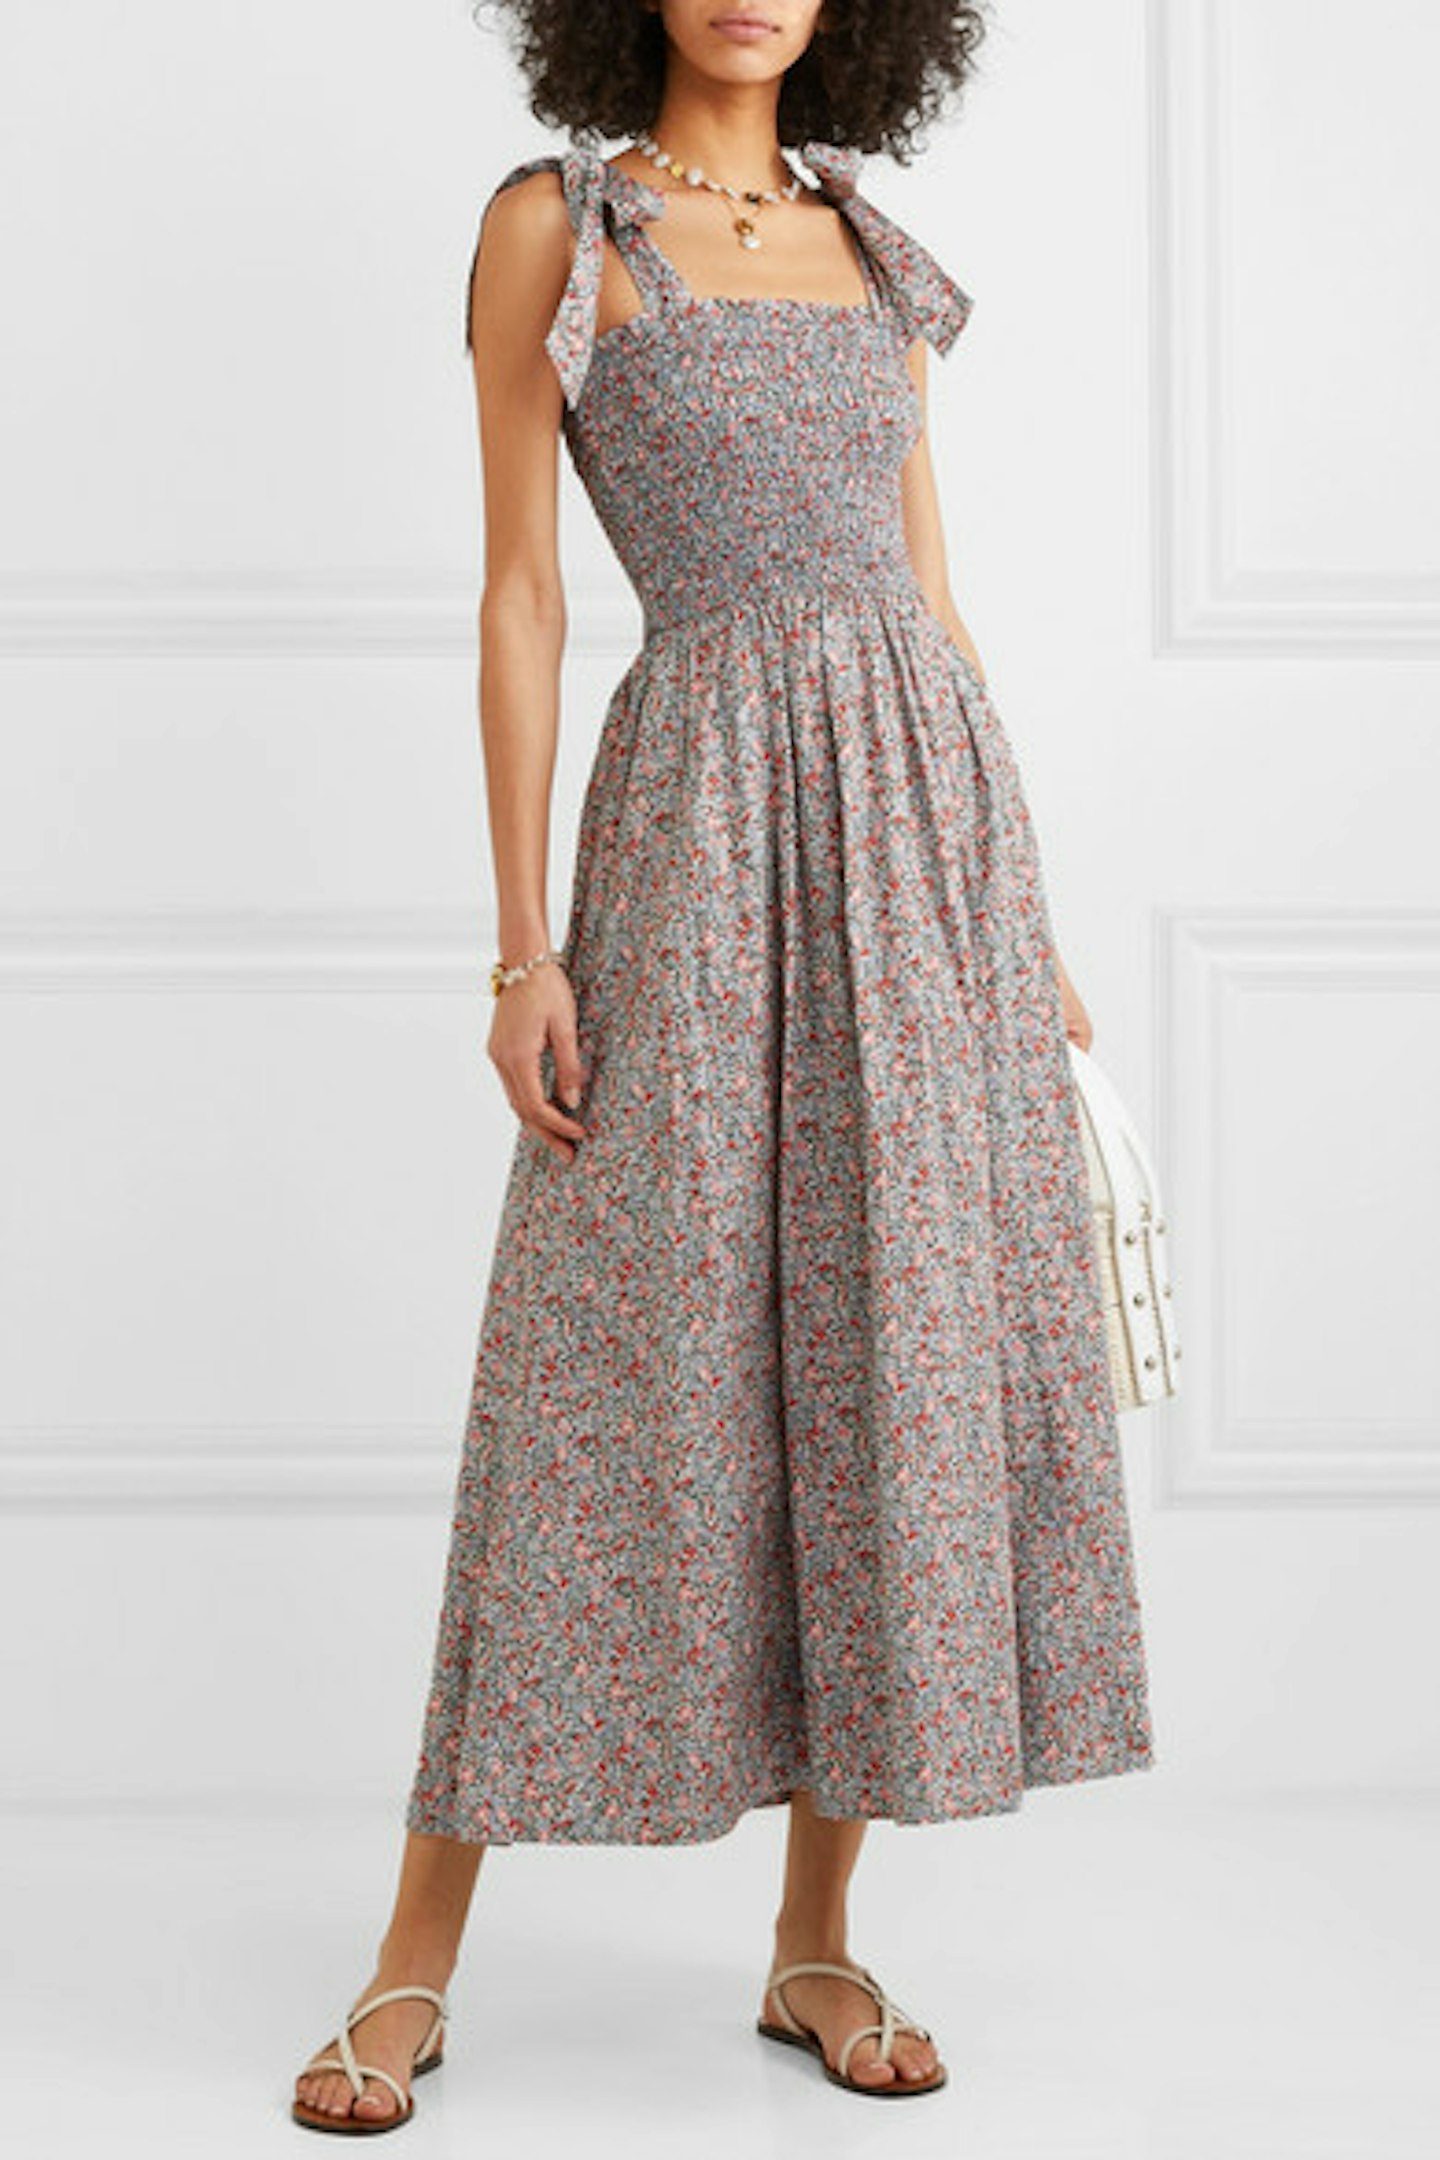 Jasmine Shirred Floral Print Maxi Dress, £265